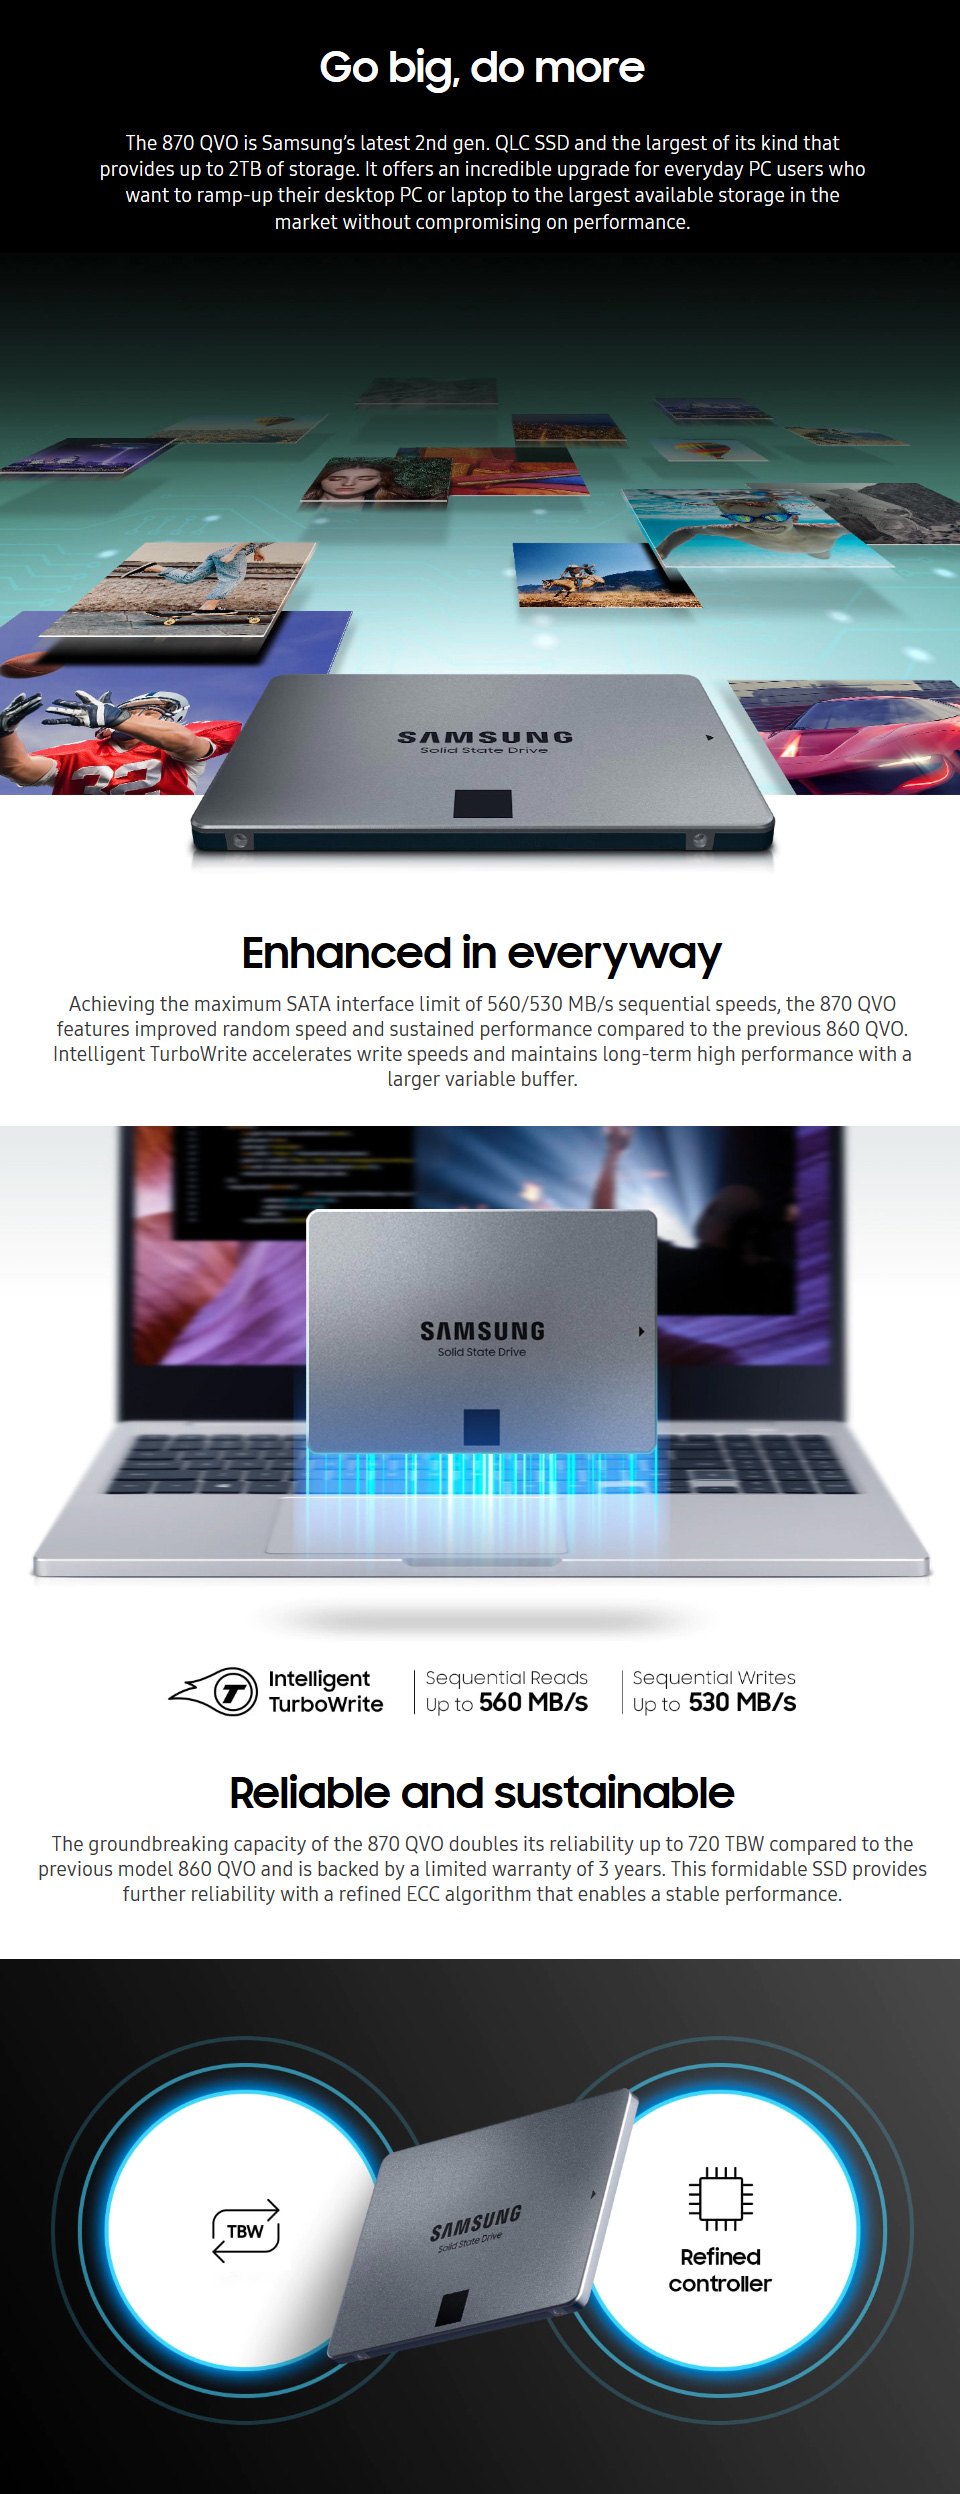 Samsung 870 EVO 2.5in SATA SSD 2TB features